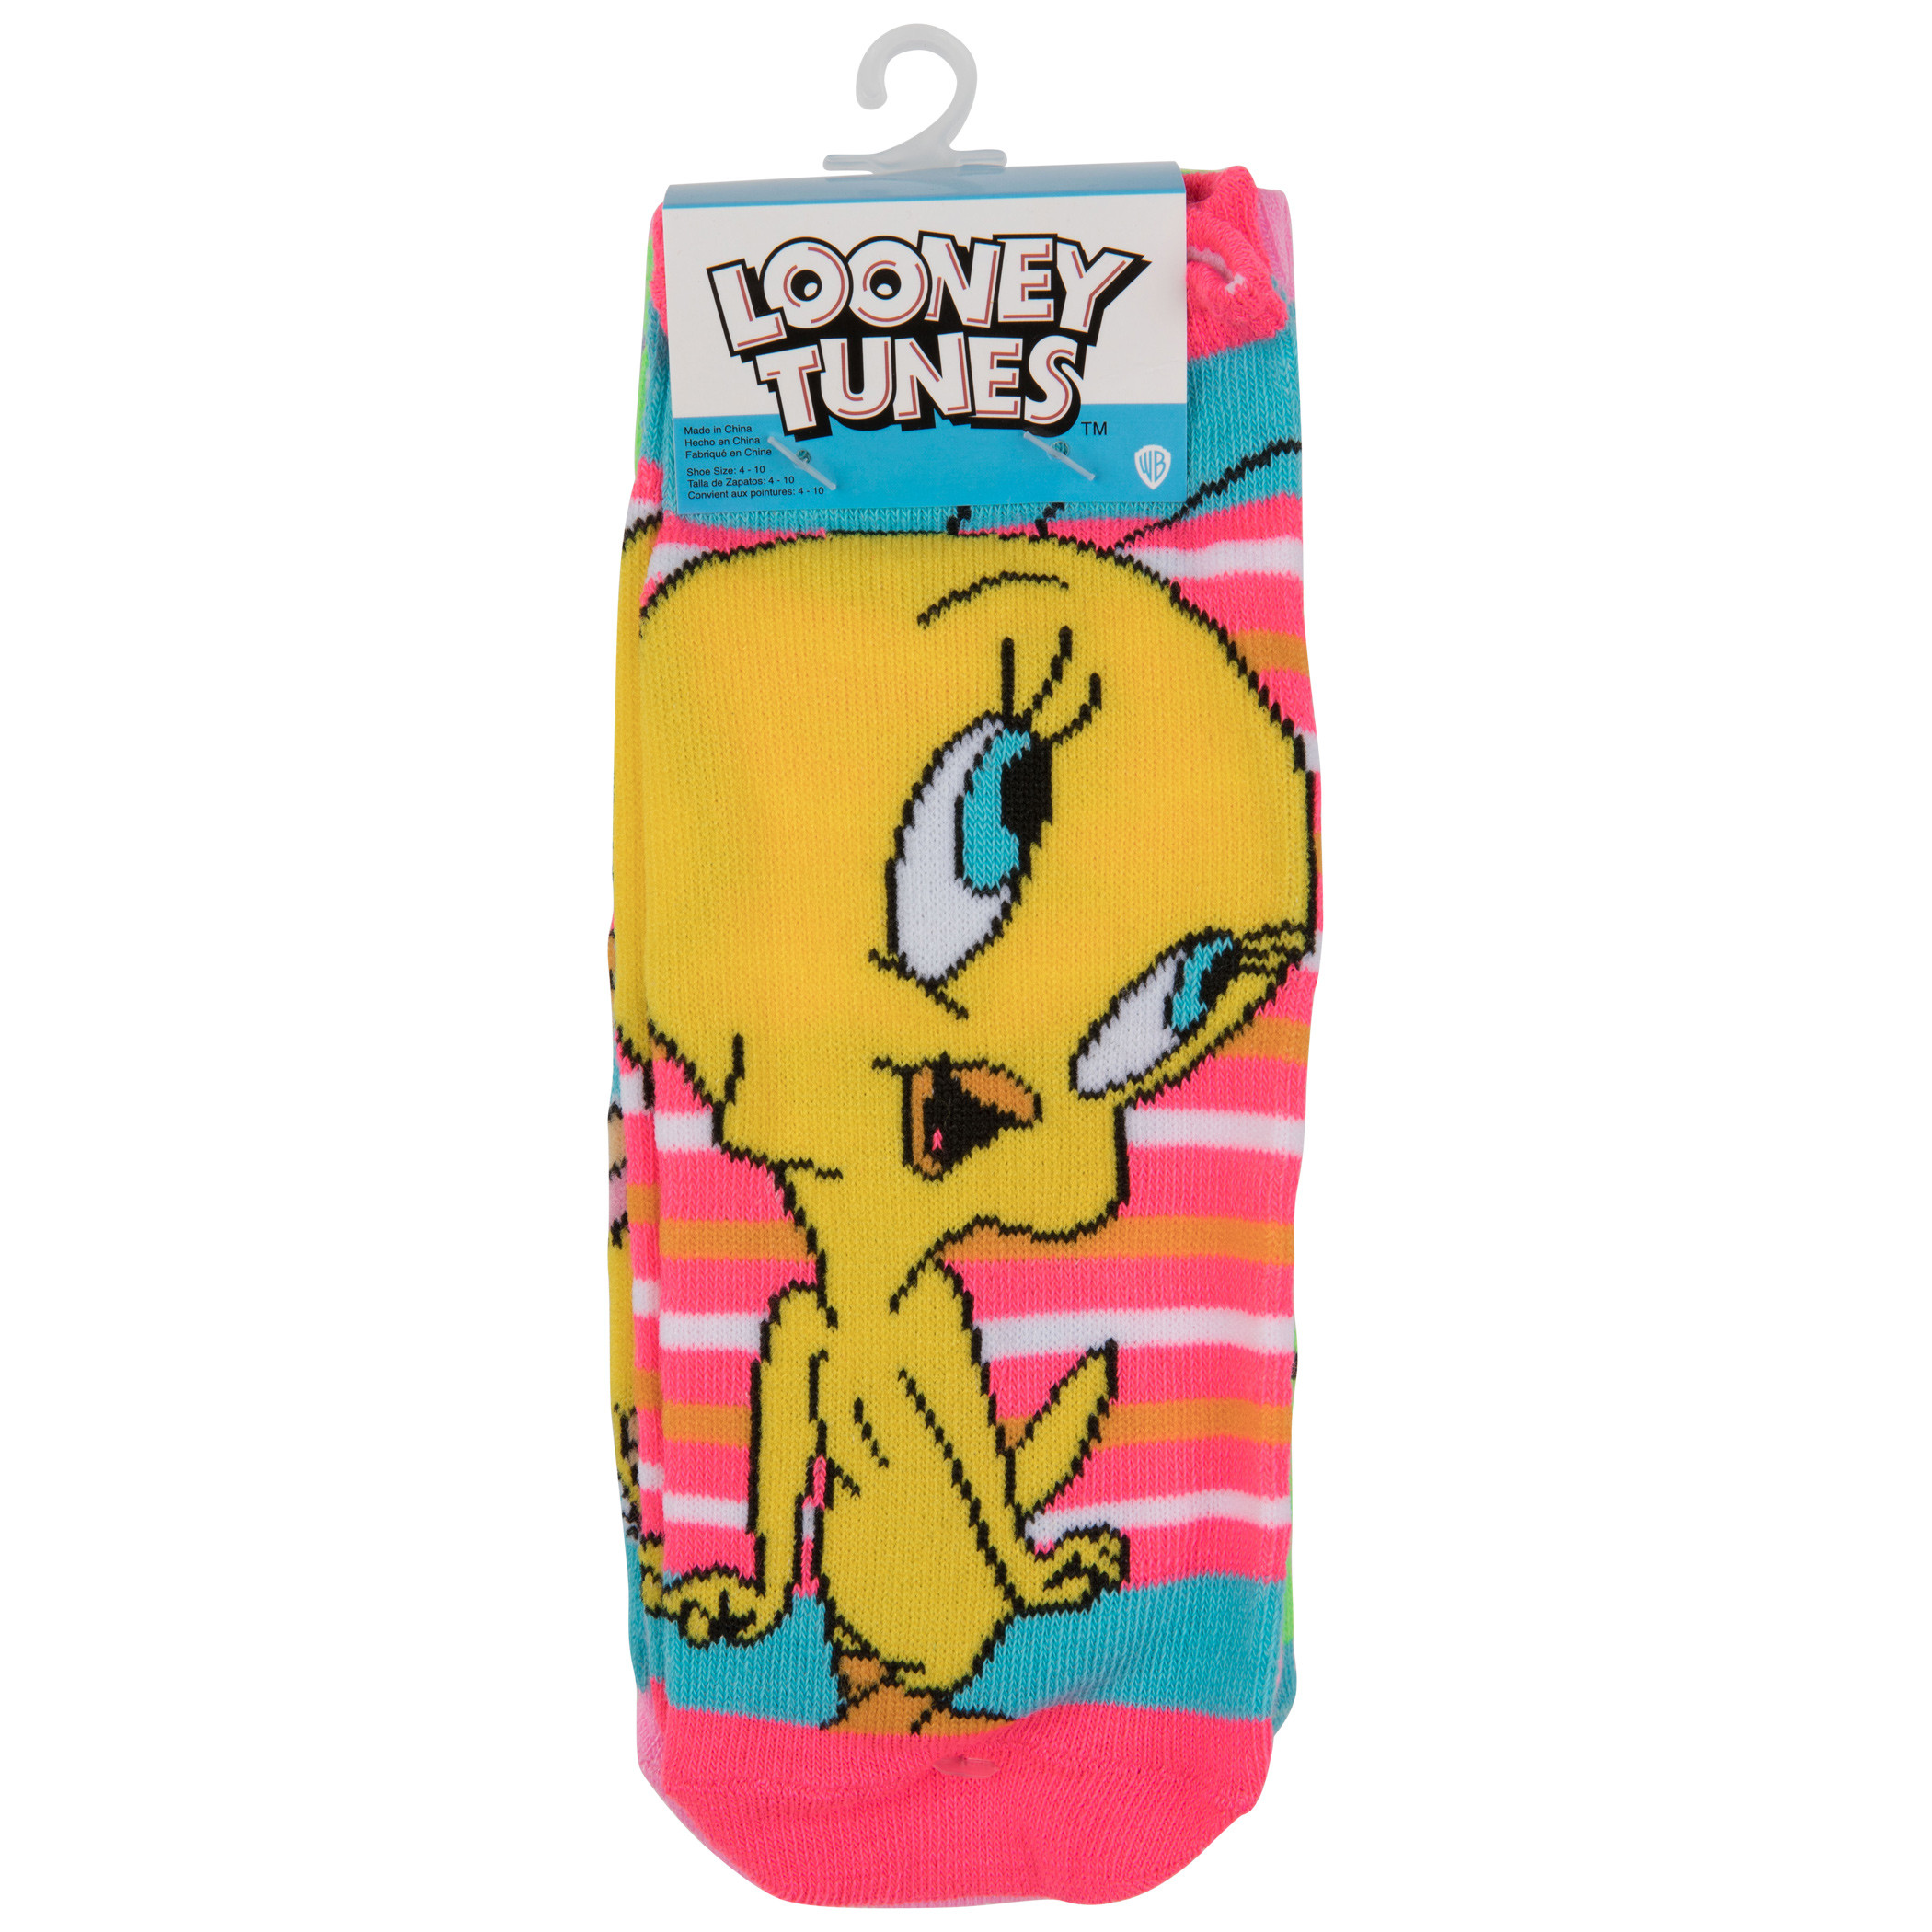 Looney Tunes Bright Women's 6-Pair Pack of Low Cut Socks